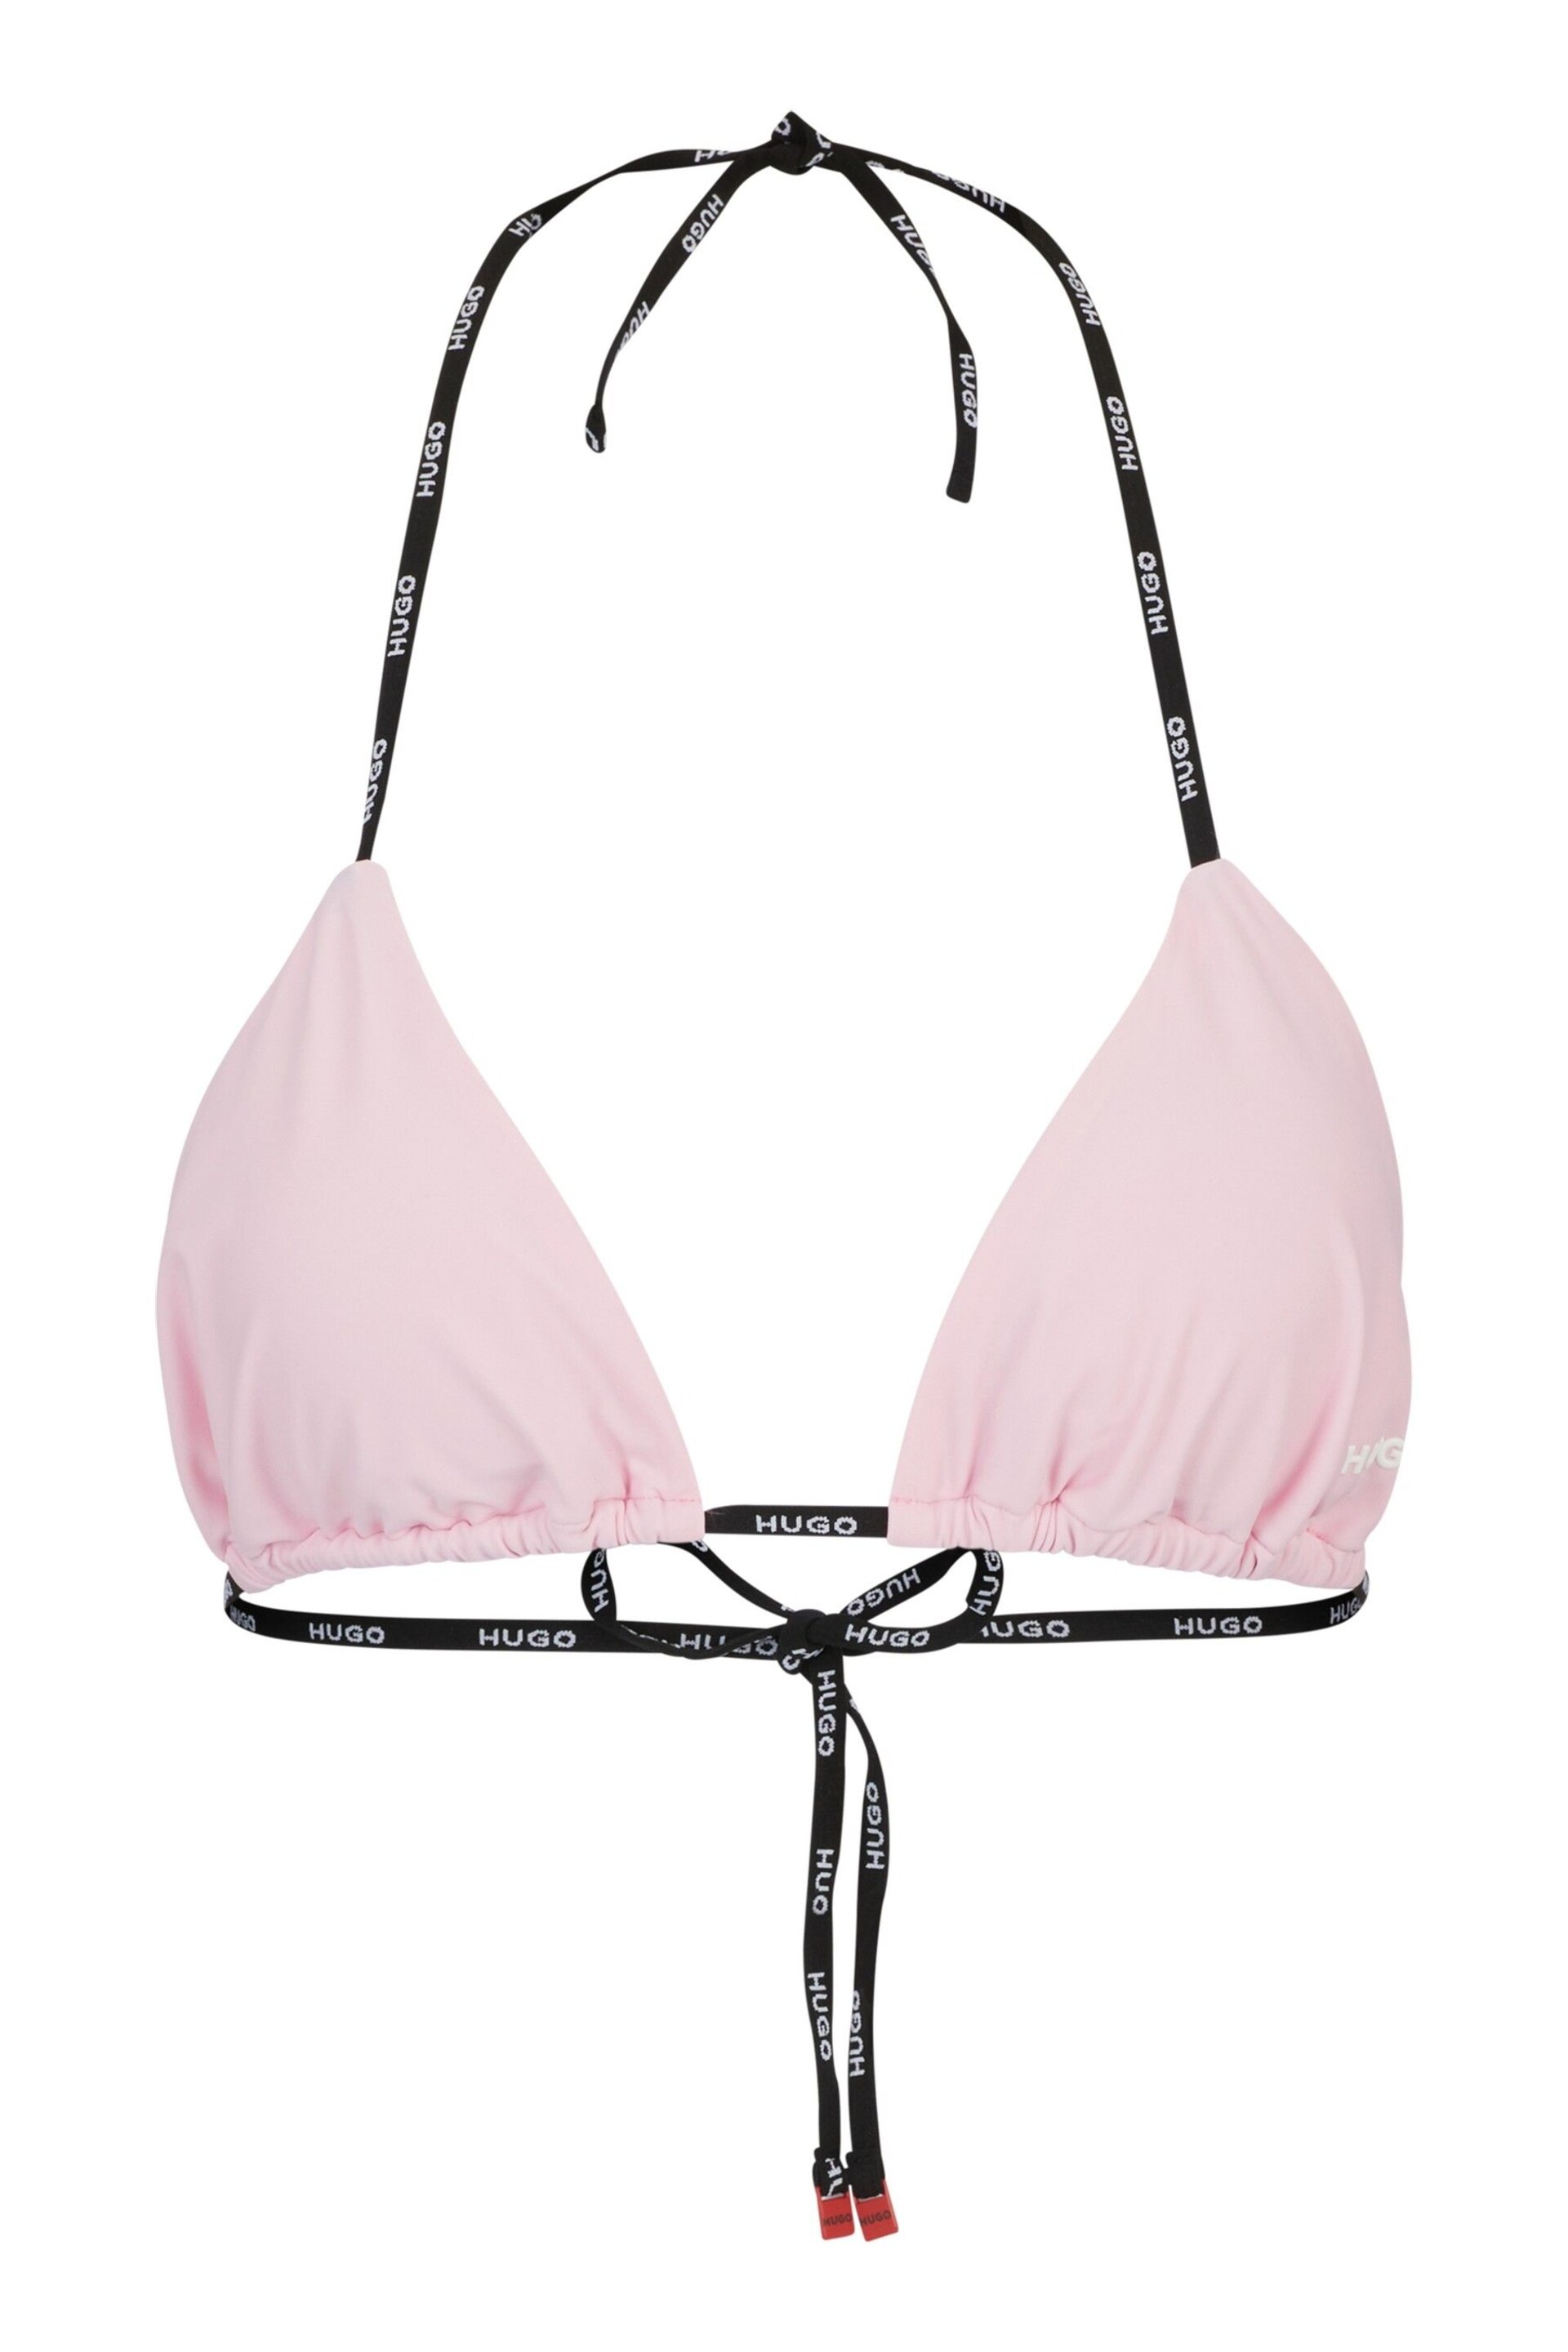 HUGO Pink Branded Strap Triangle Bikini Top With Logo Detail - Image 5 of 5